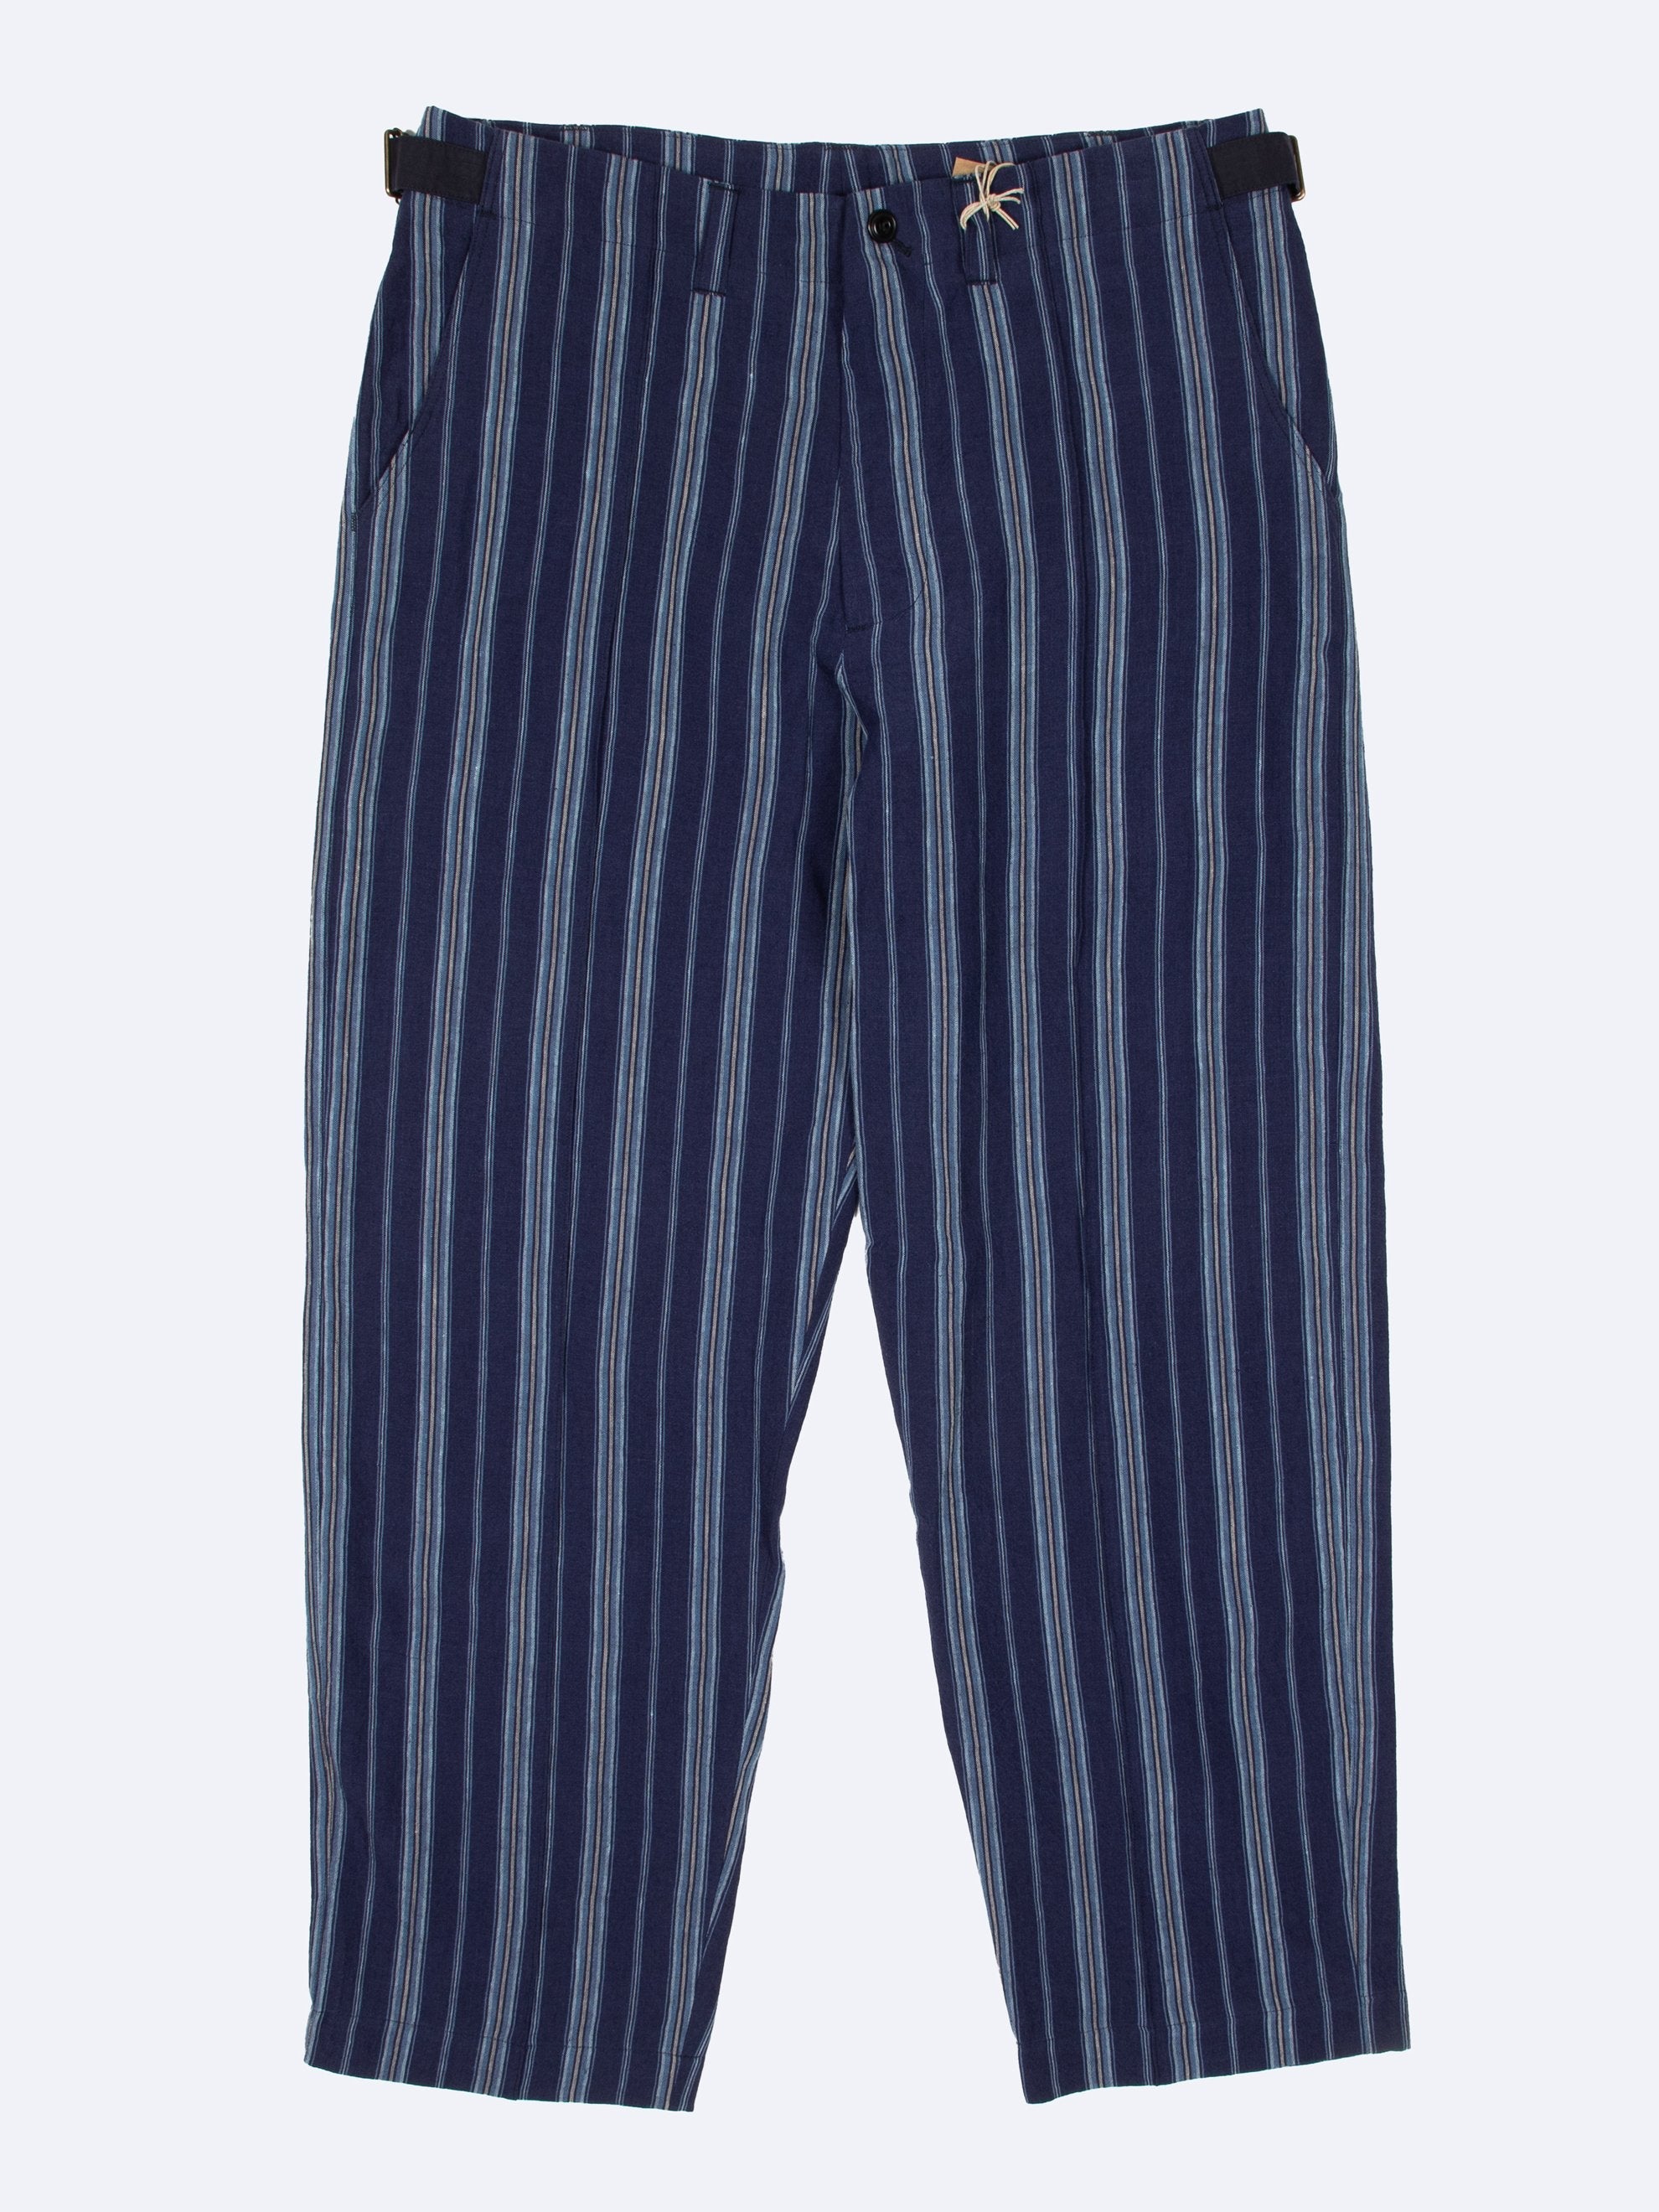 70's Trousers (Navy Stripe)